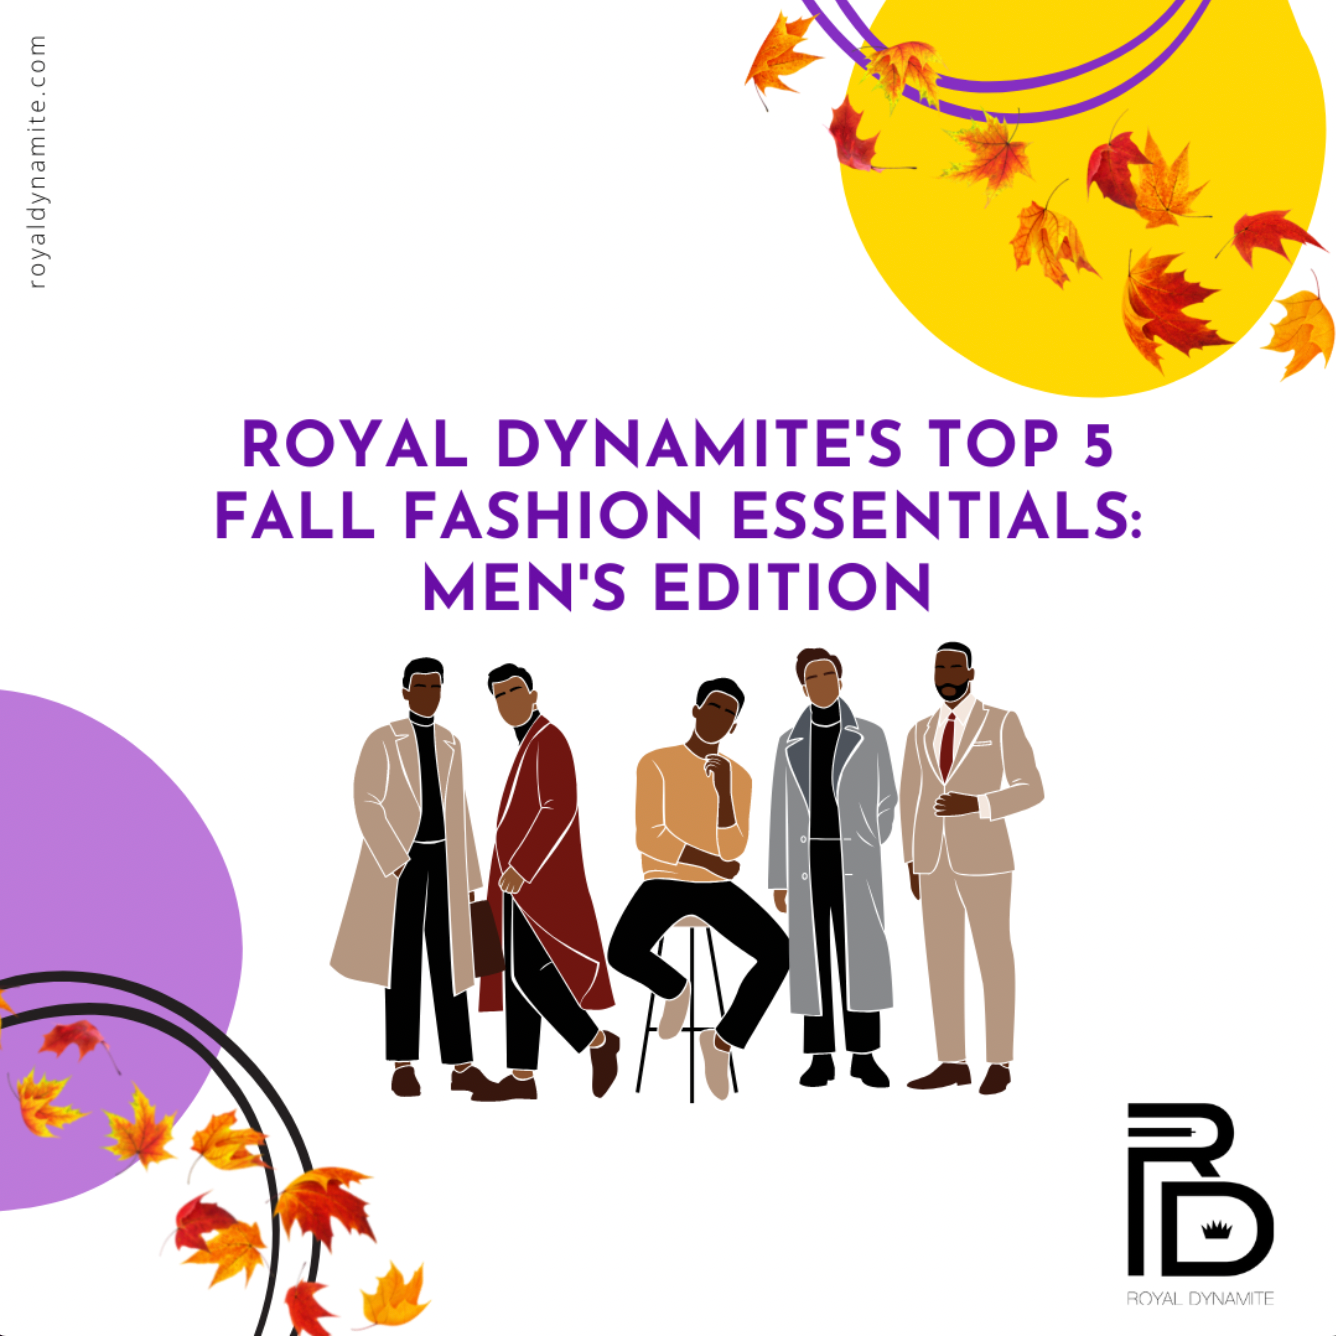 Royal Dynamite's Top 5 Fall Fashion Essentials: Men’s Edition